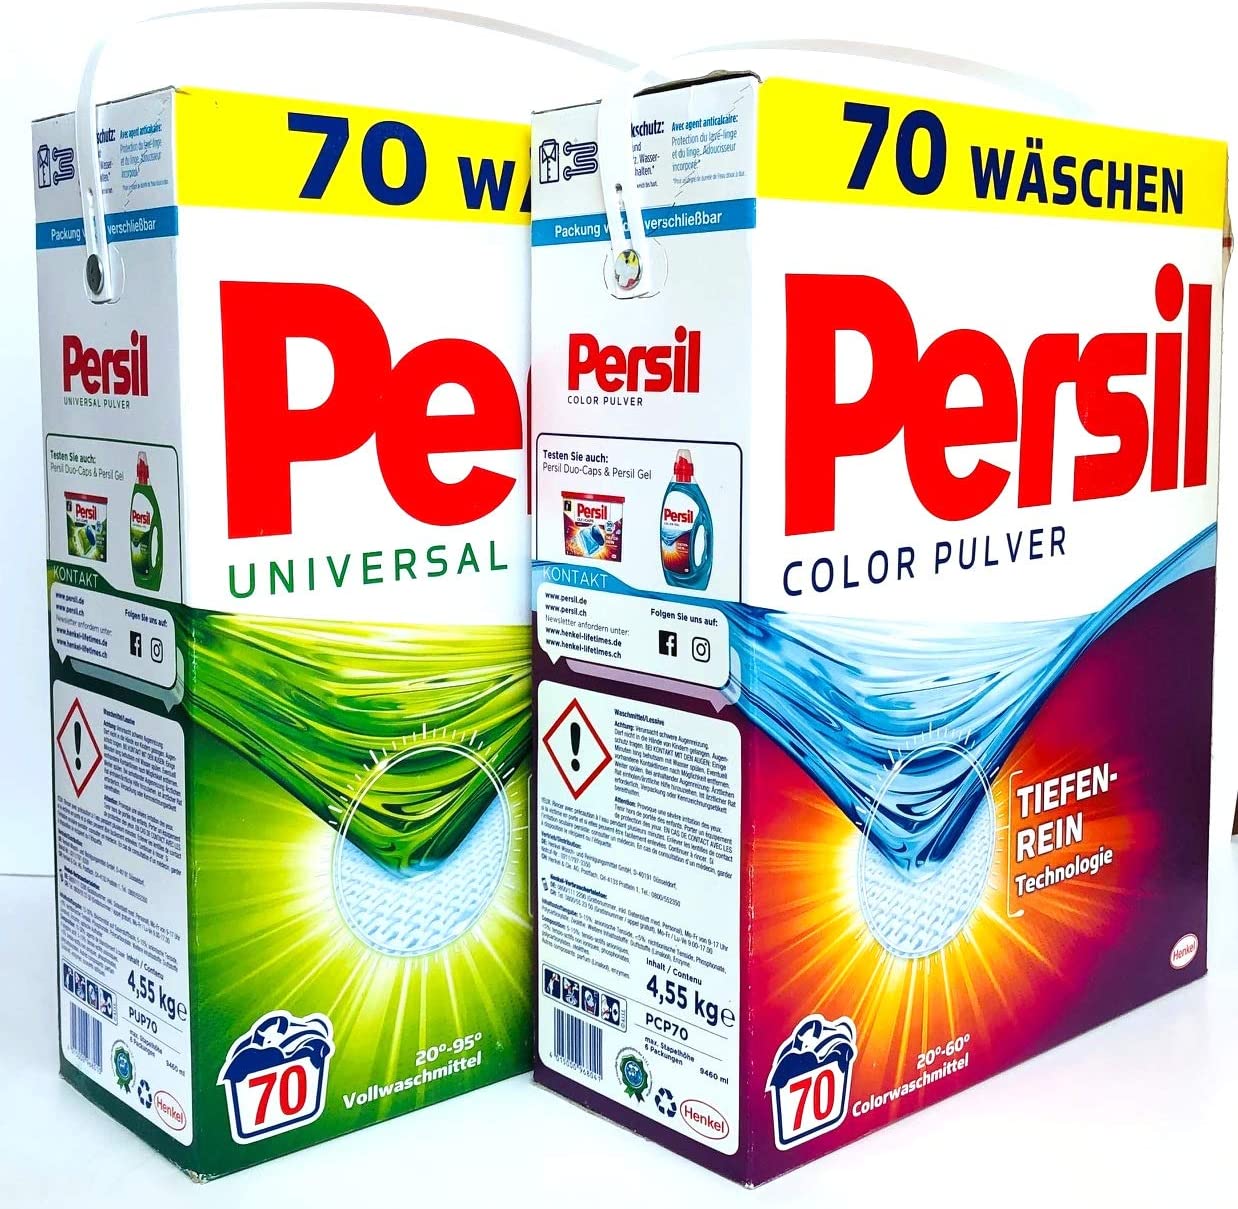 Persil Powder Combo Set Color & Universal (70 WL / 4.55 Kg Each)